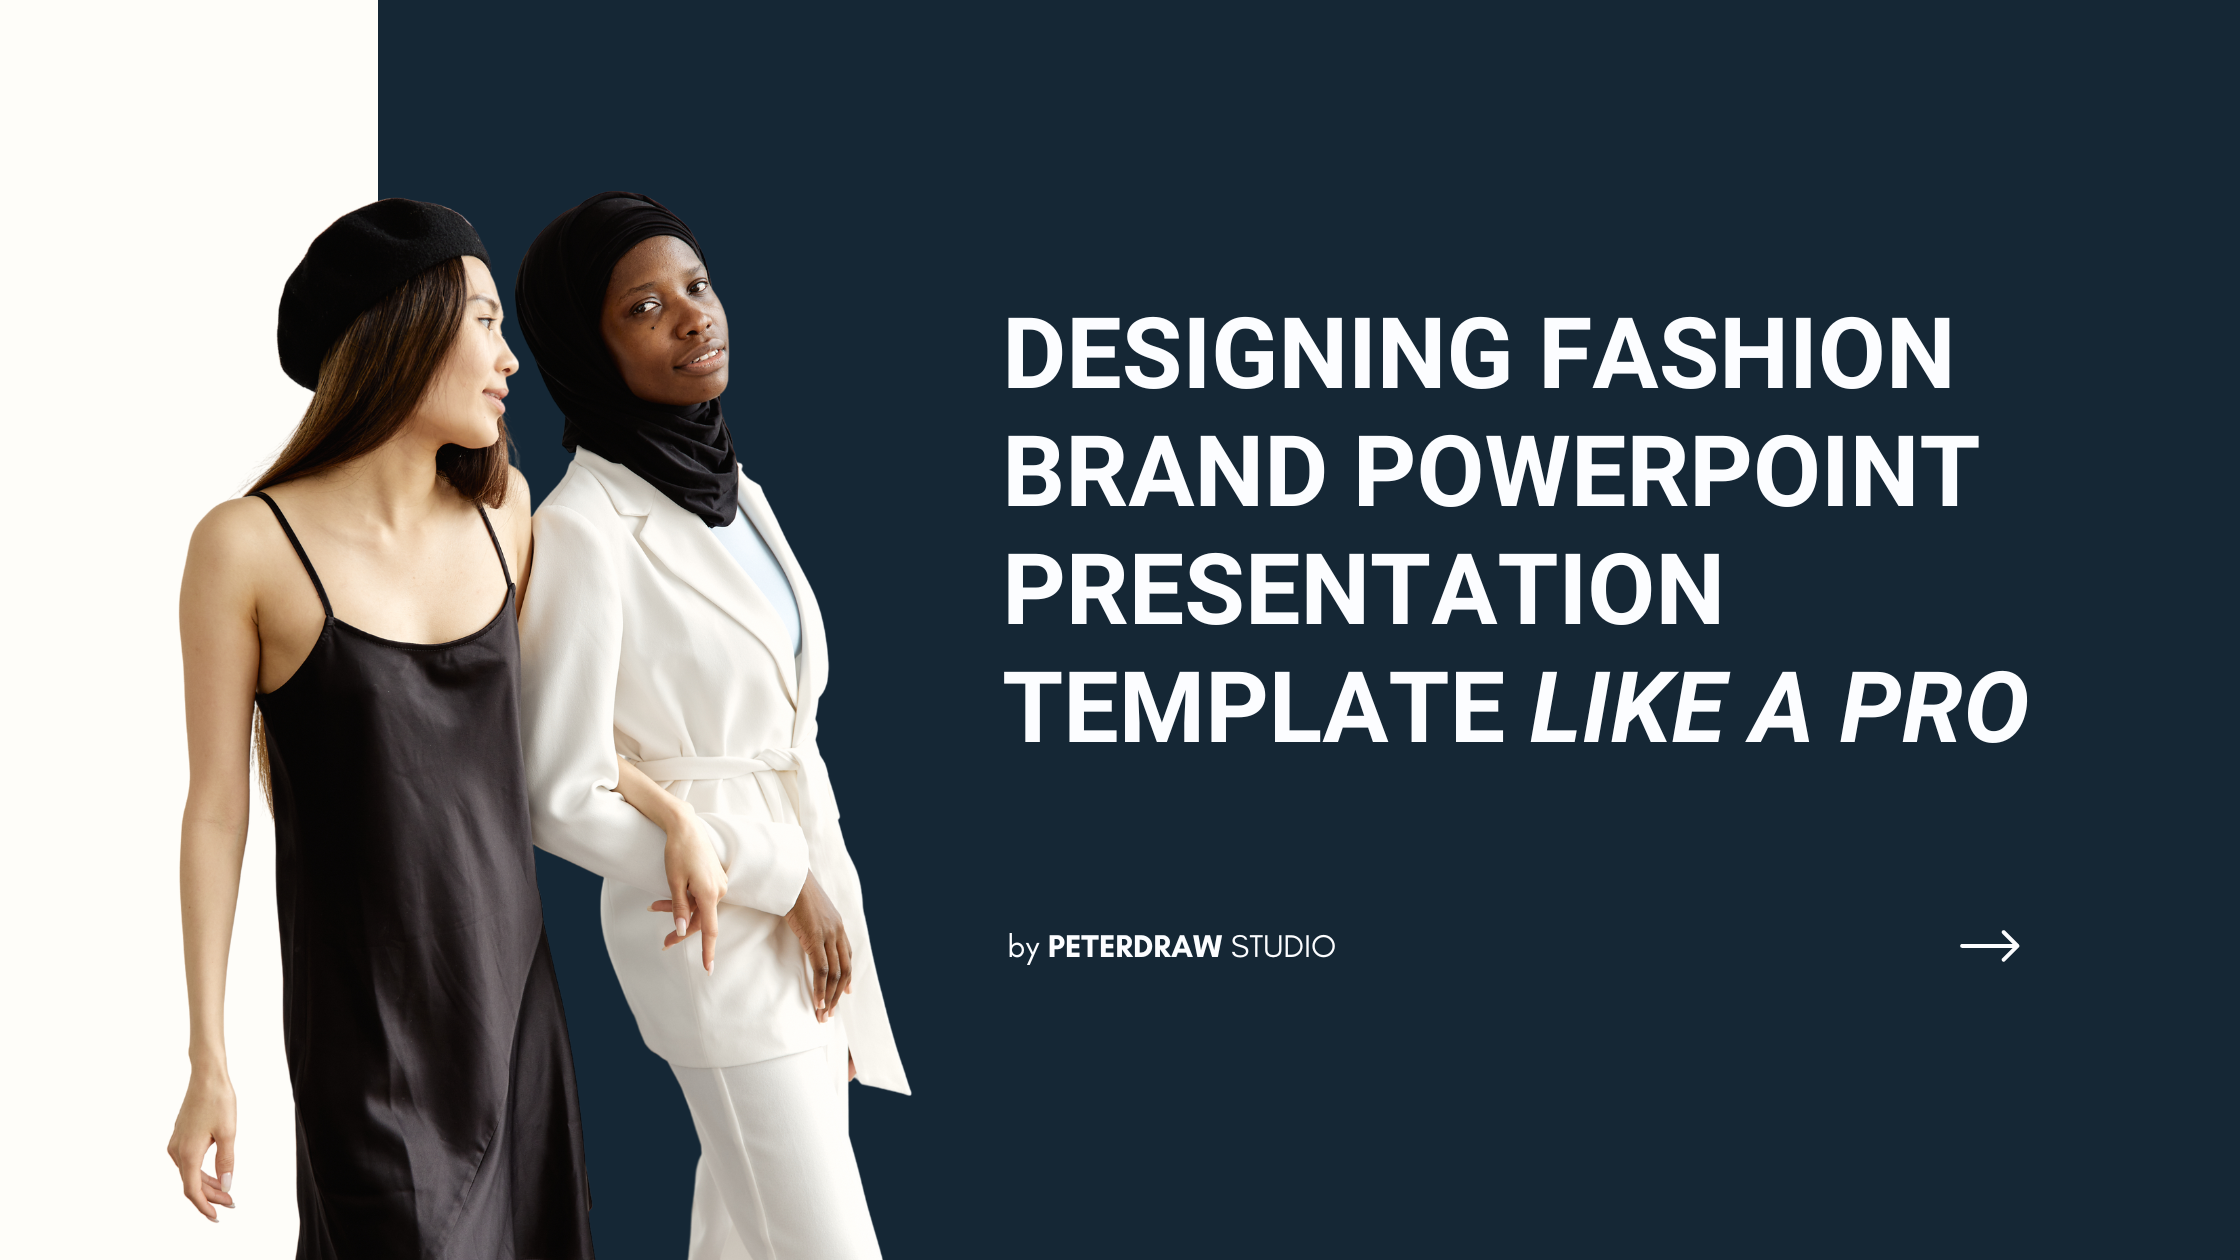 objectives of fashion presentation